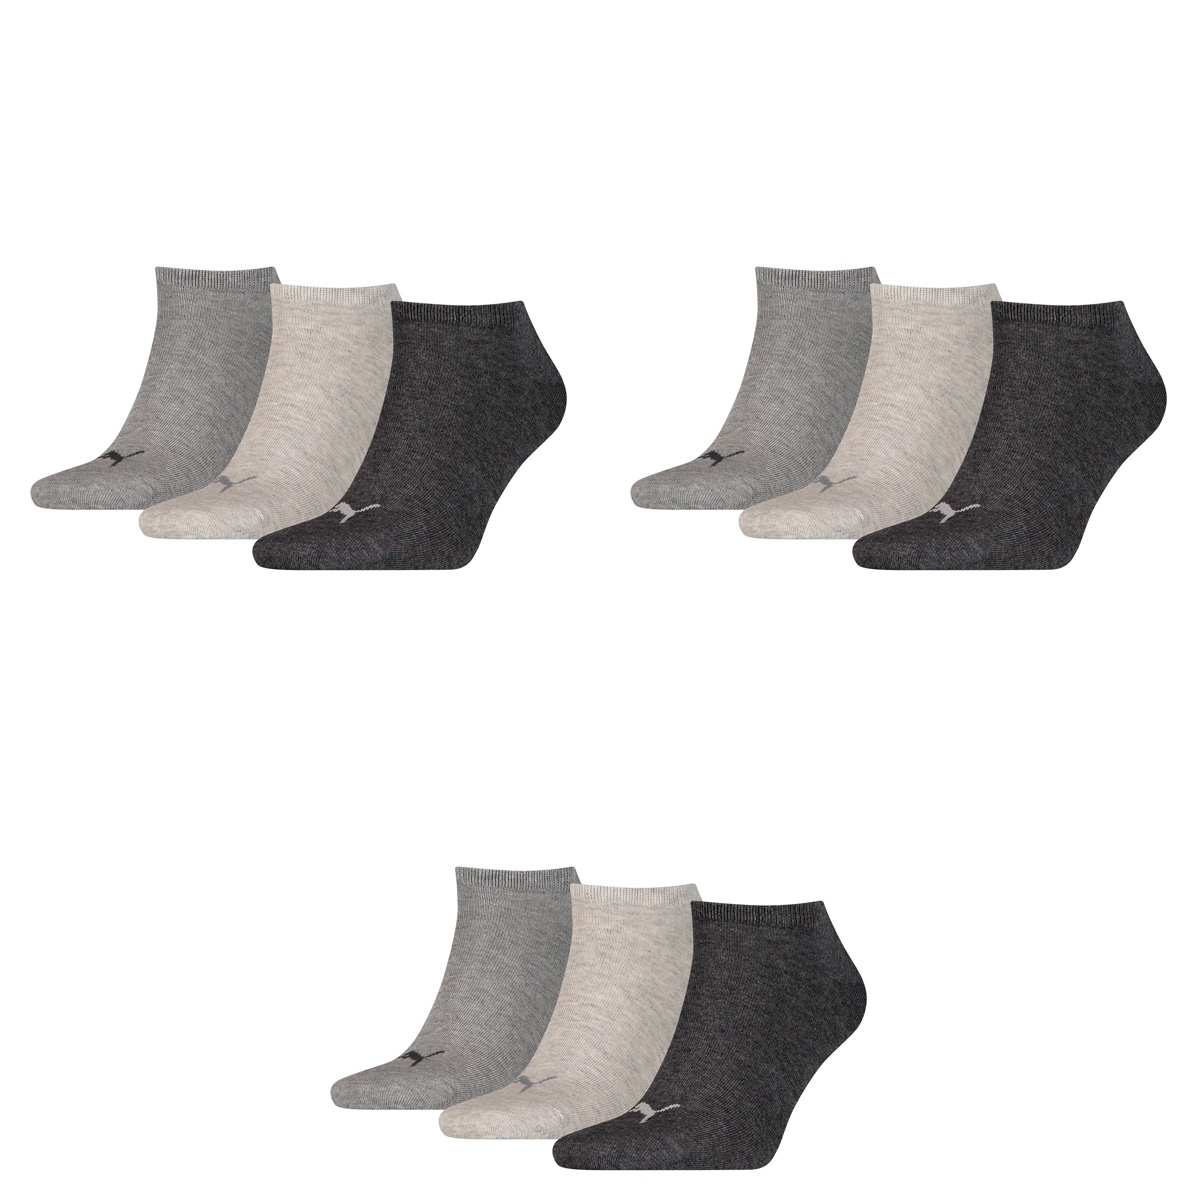 Puma unisex Sneaker Socken Kurzsocken Sportsocken 261080001 15 Paar, Farbe:Grau, Menge:15 Paar (5 x 3er Pack), Größe:39-42, Artikel:-800 anthracite/l mel grey/m mel grey